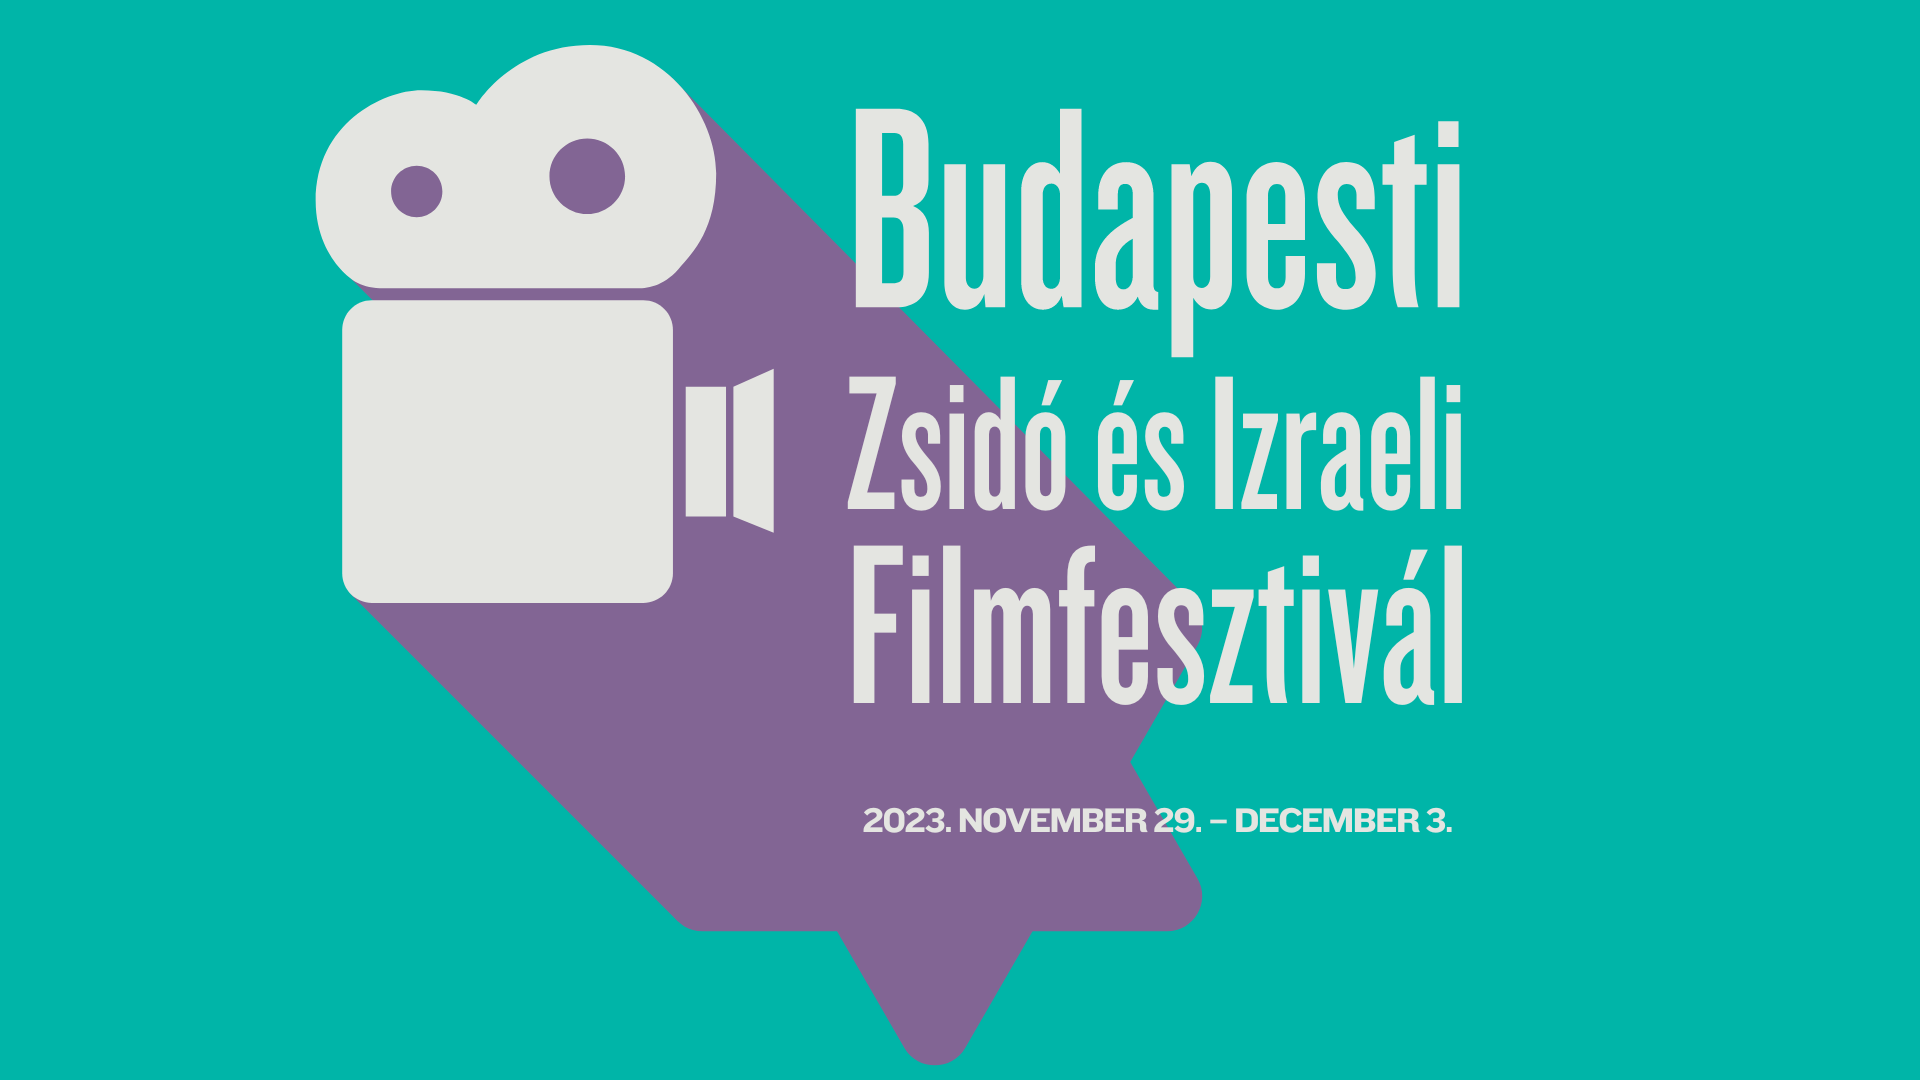 Budapest Jewish and Israeli Film Festival 